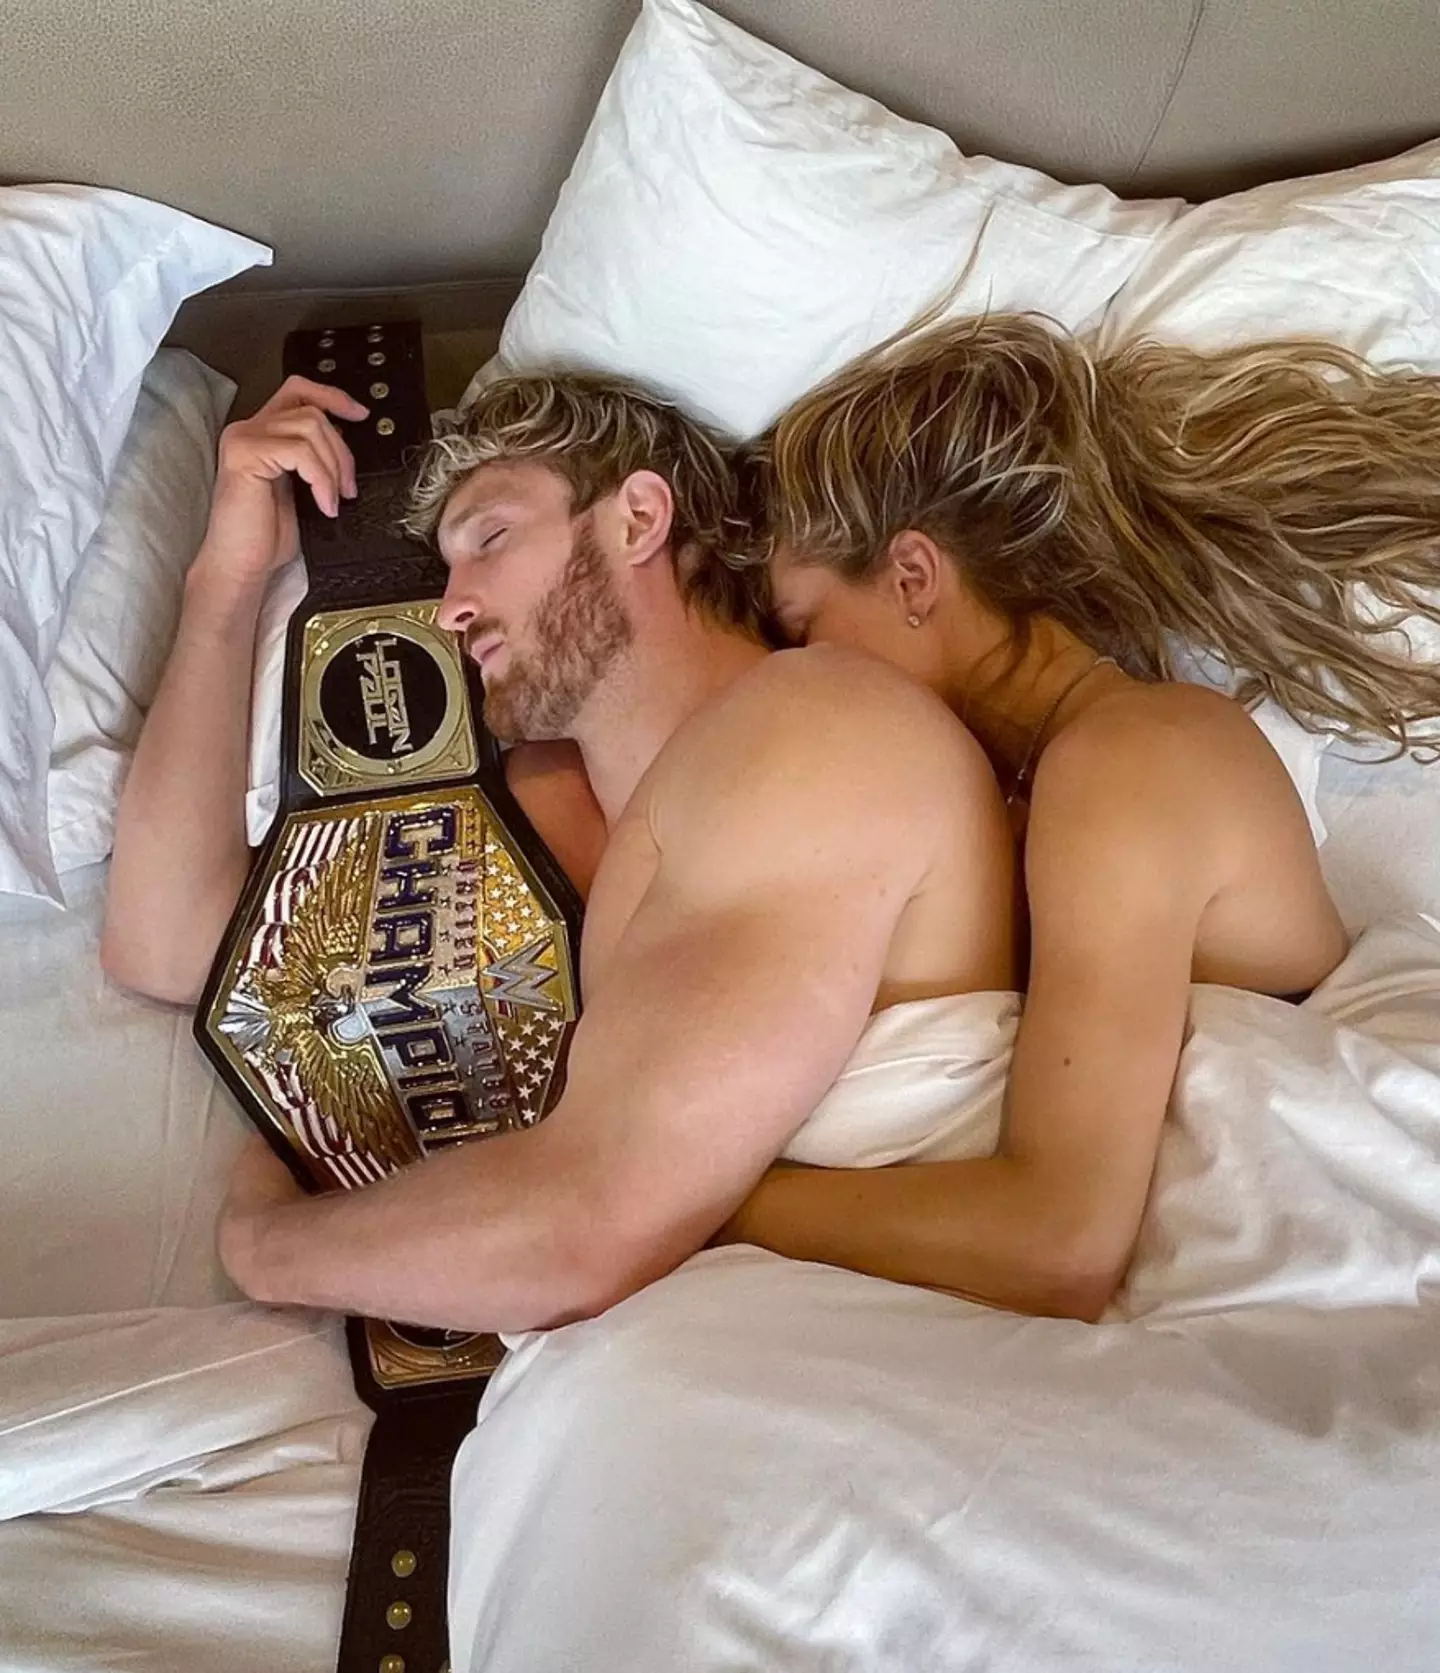 Paul holding the United States Championship in bed alongside fiancee Nina Agdal. (Image